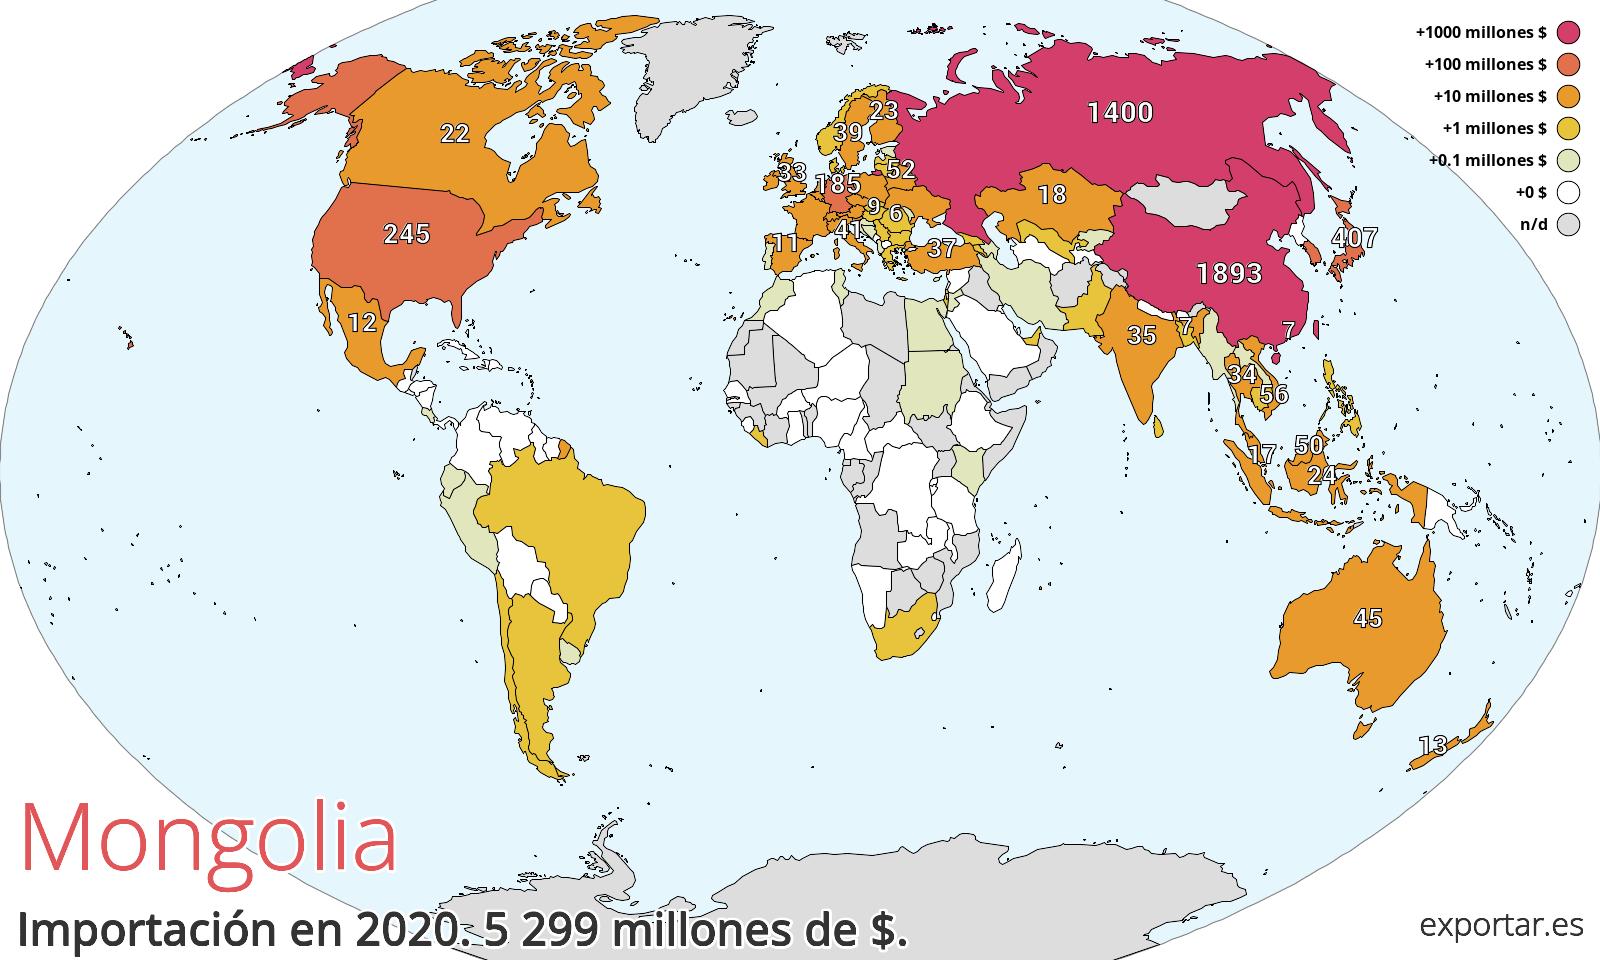 Mapa de importación de Mongolia en 2020.